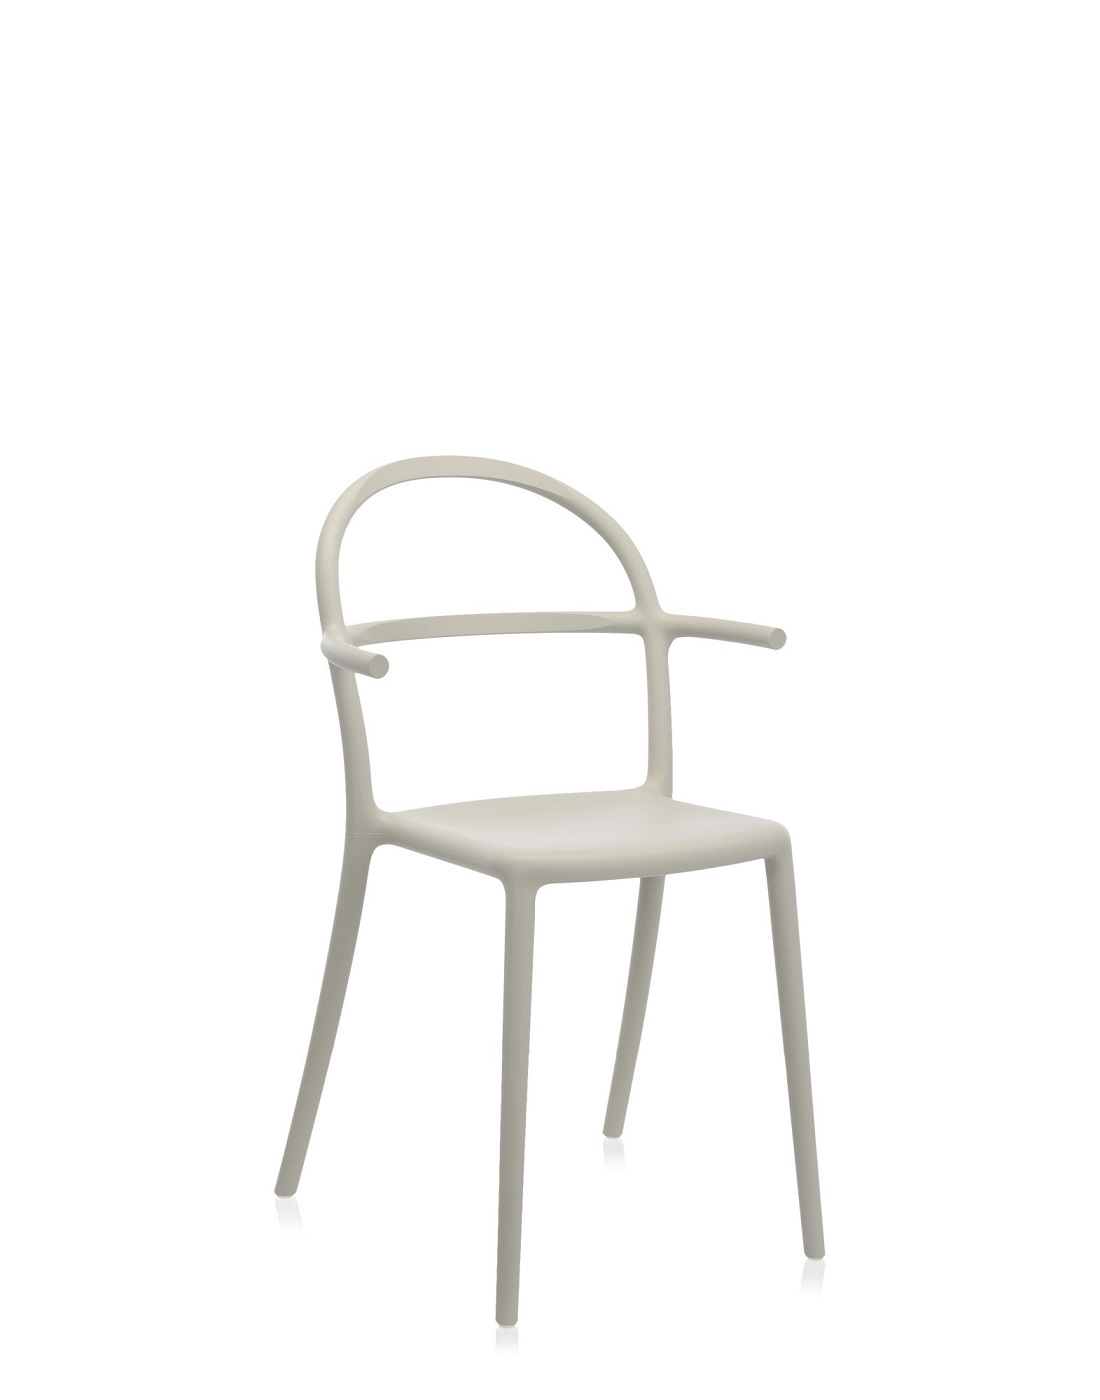 chair-generic-c-grey-philippe-starck-kartell